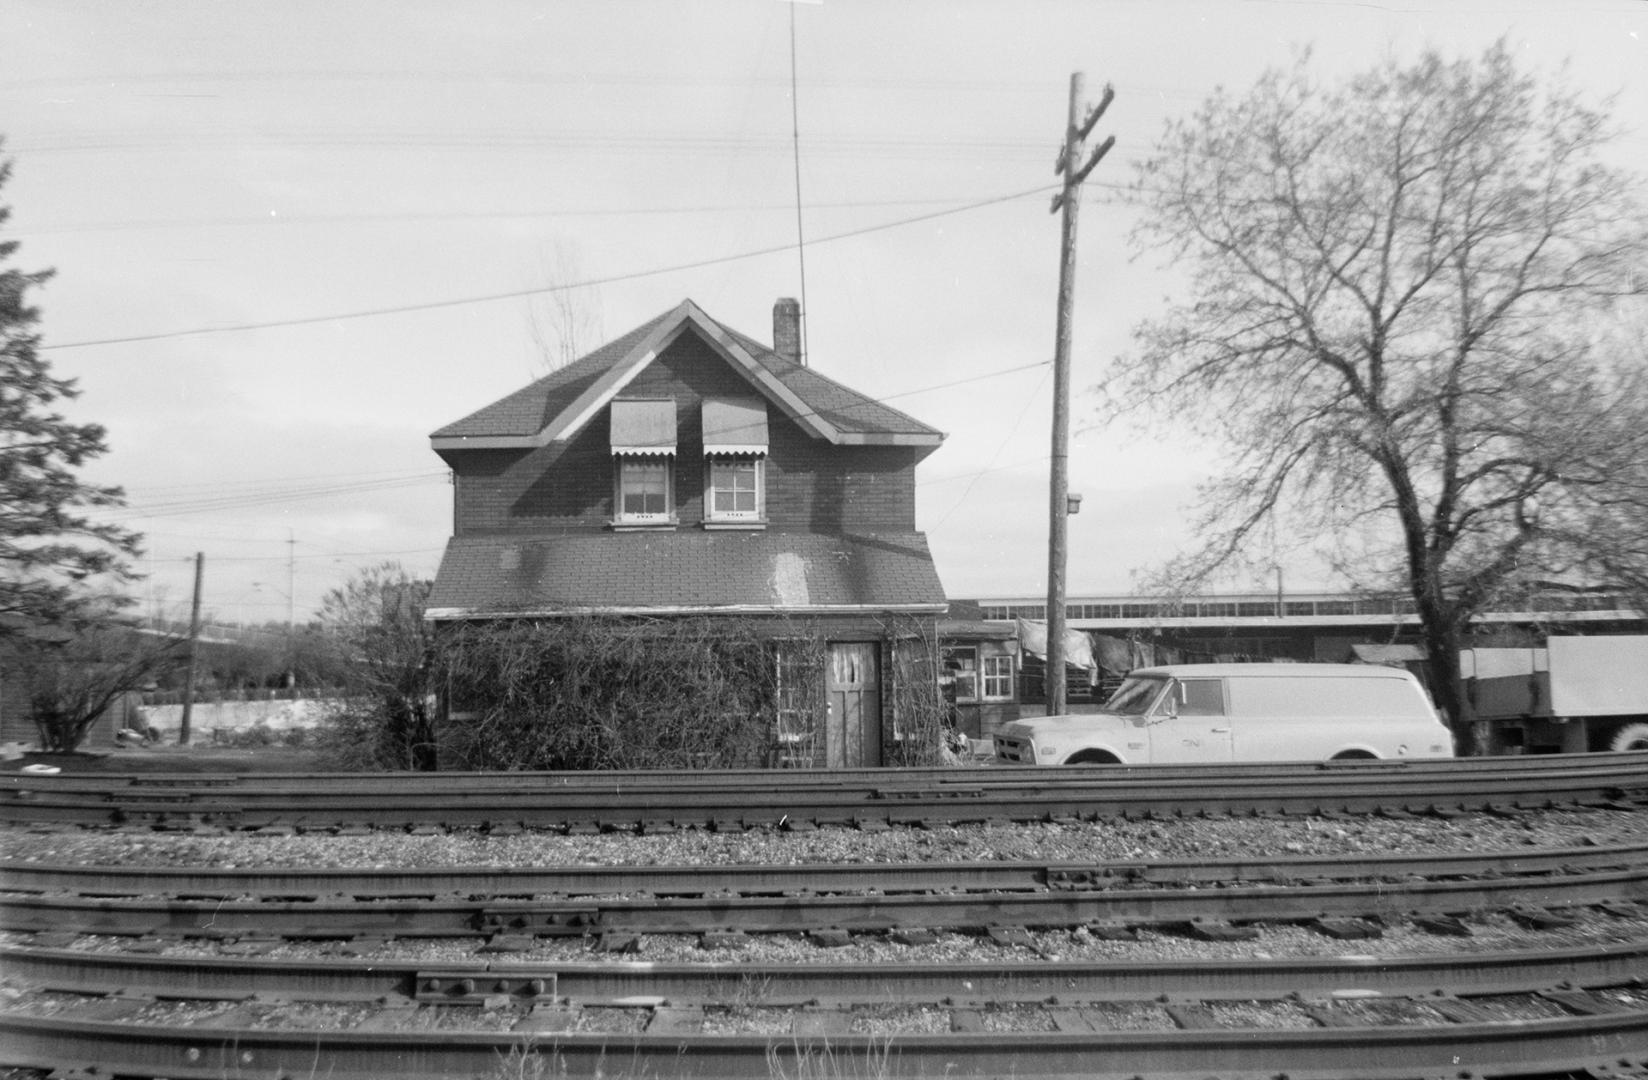 Oriole station